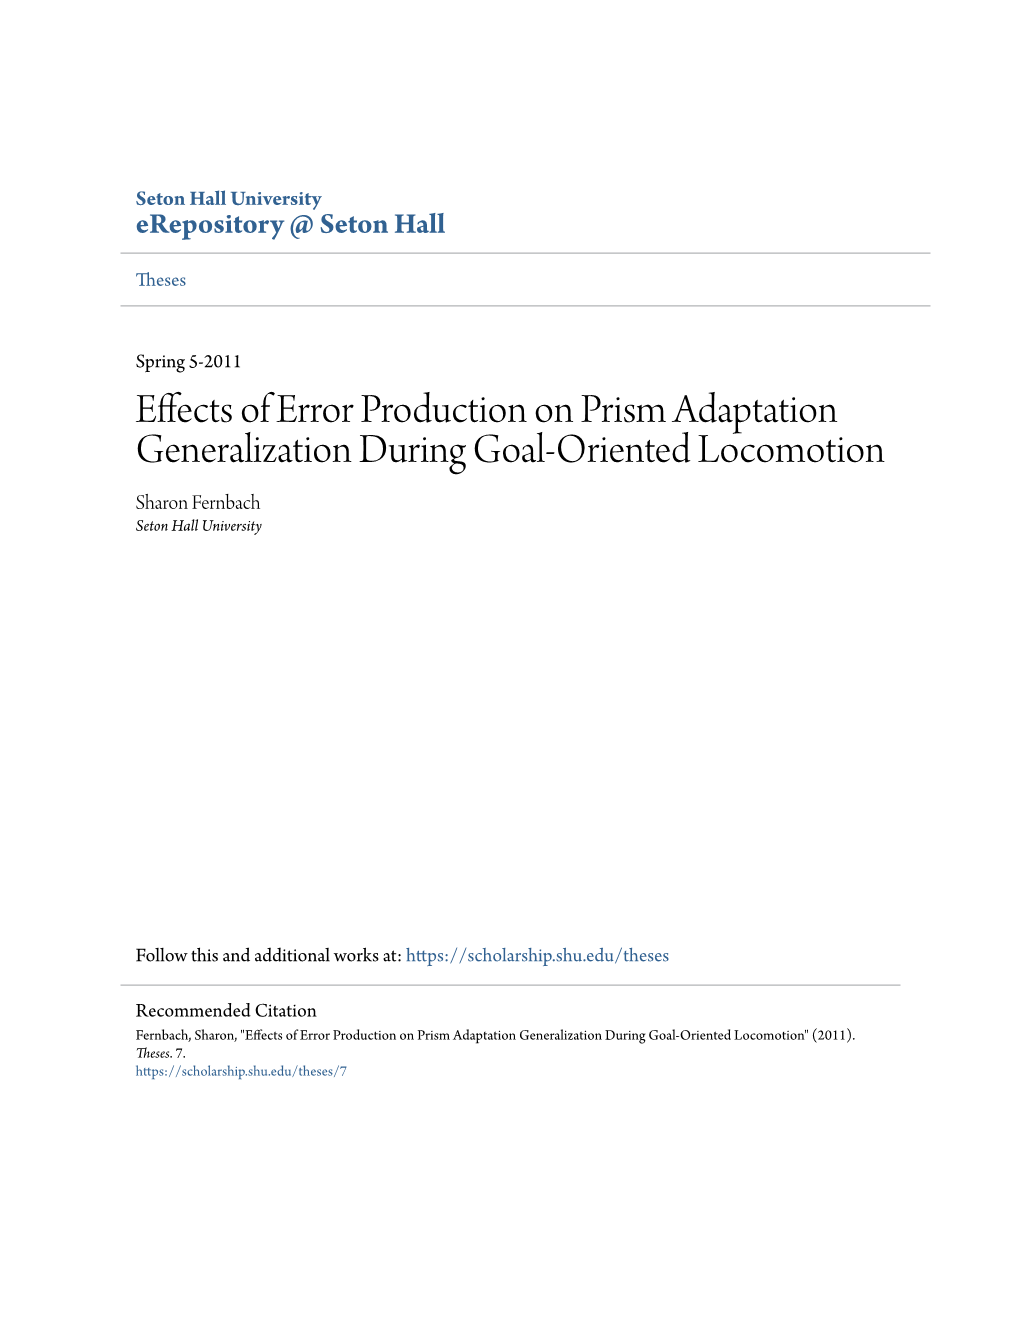 Effects of Error Production on Prism Adaptation Generalization During Goal-Oriented Locomotion Sharon Fernbach Seton Hall University